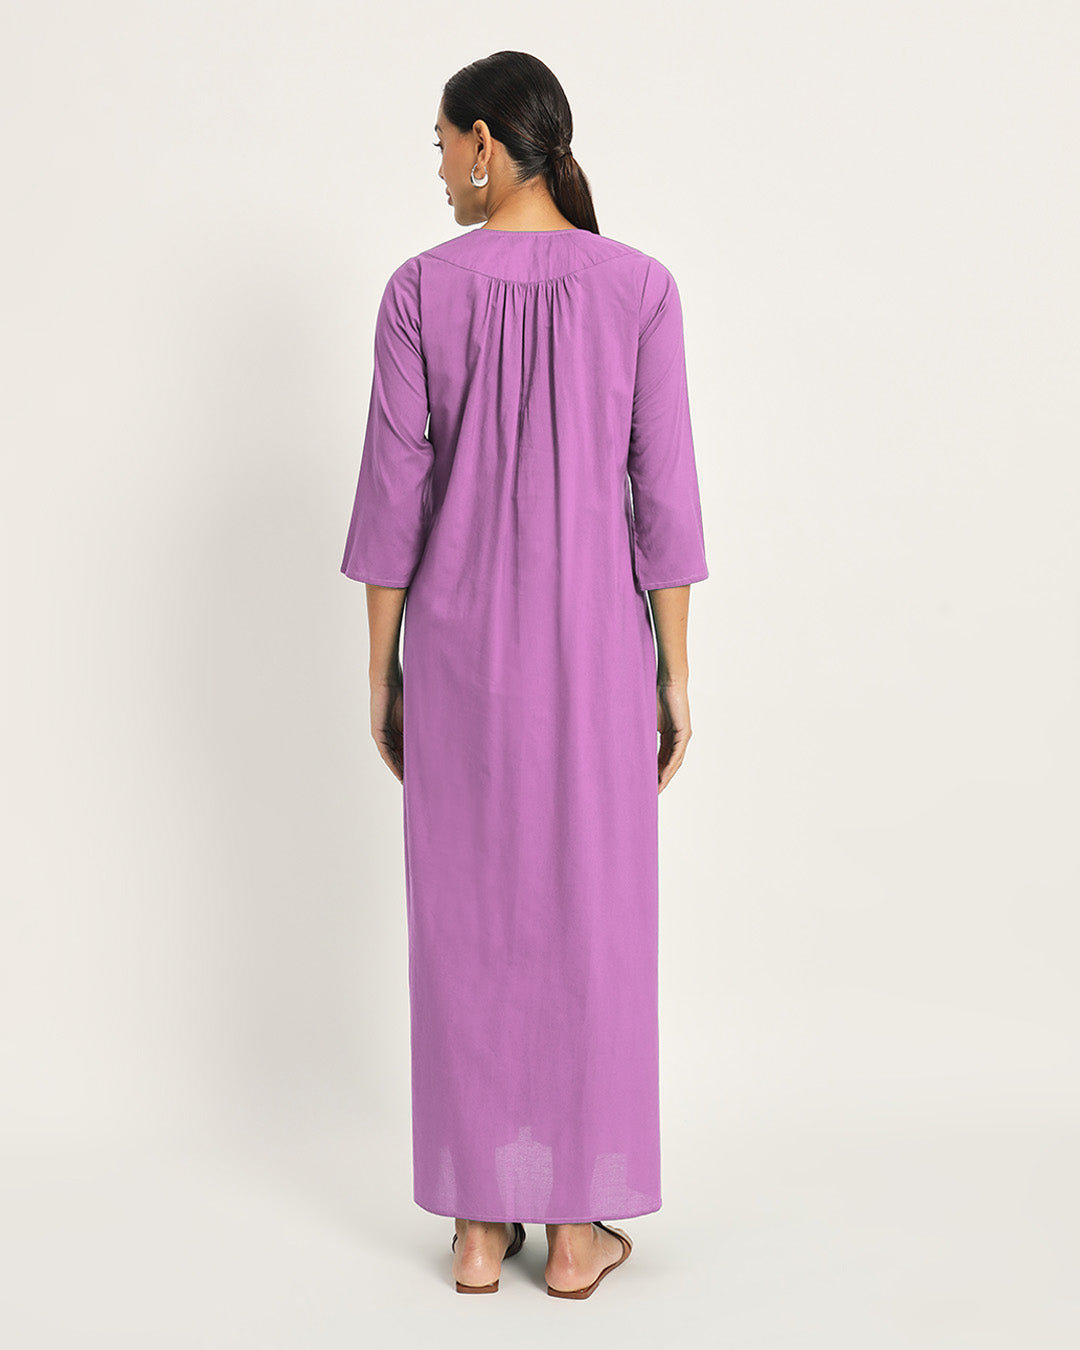 Combo: Lilac & Wisteria Purple Nighttime Must-Have Nightdress